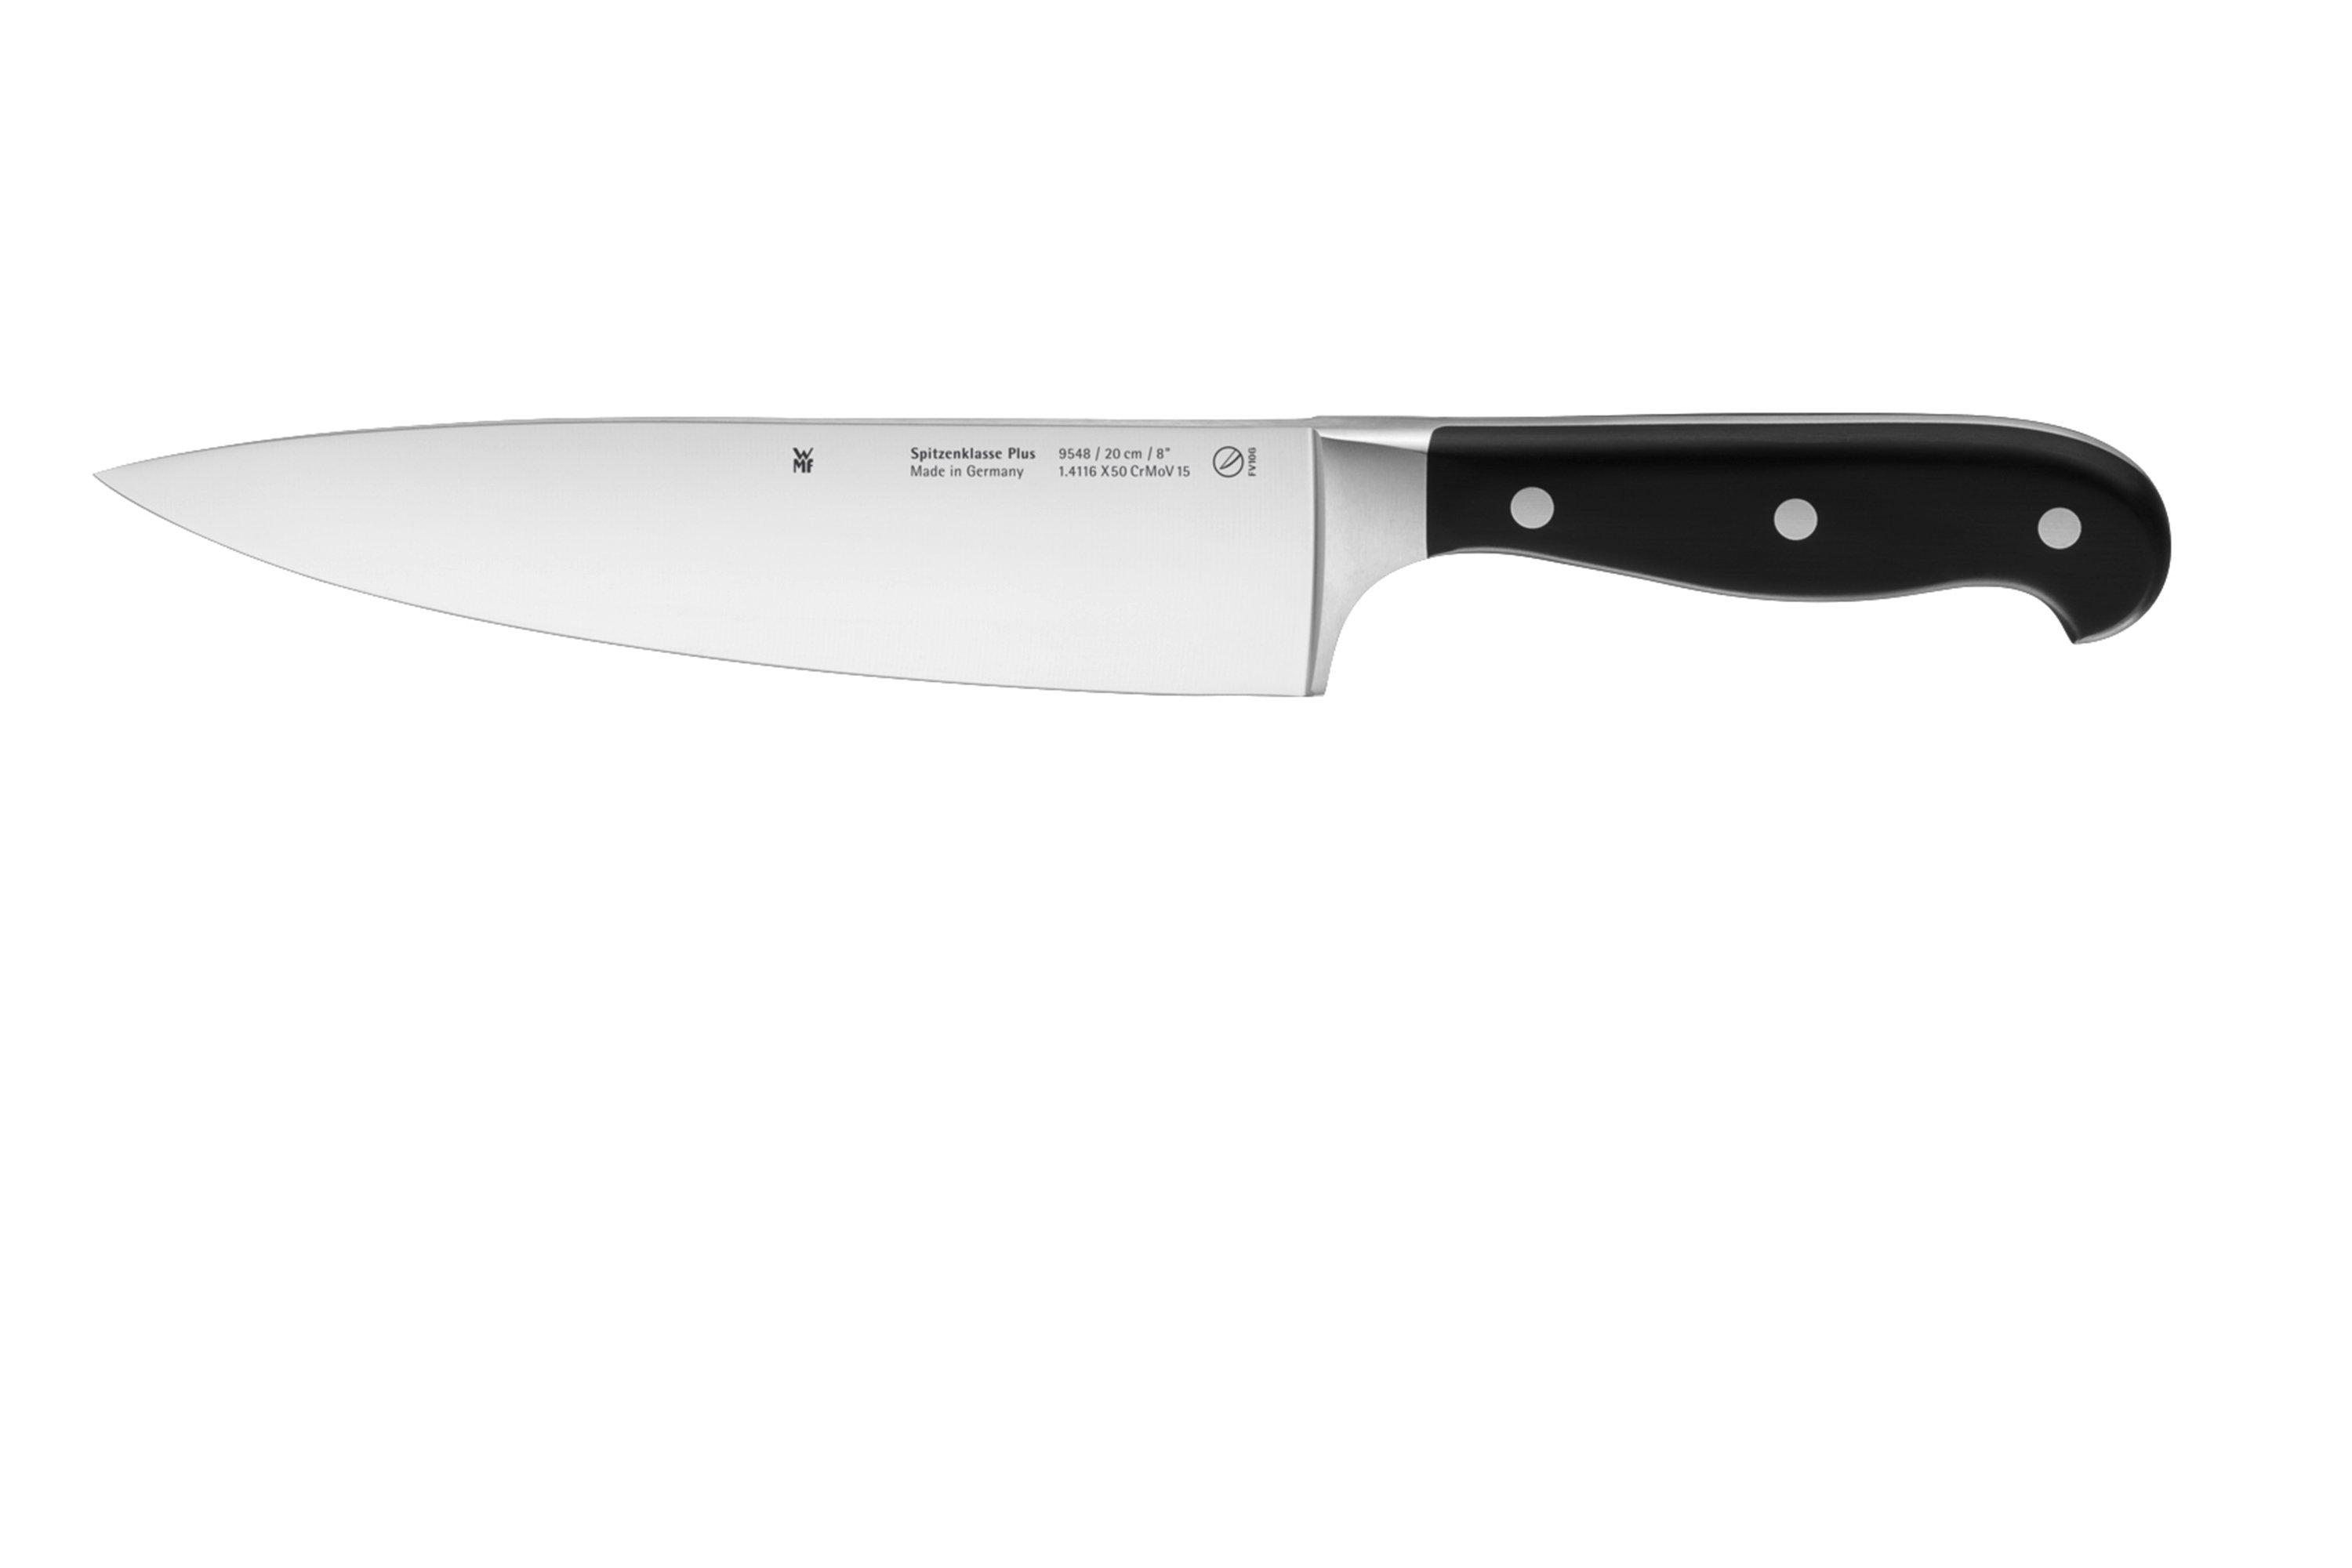 | 1894919992, set Plus WMF at Advantageously Spitzenklasse knife 3-piece shopping